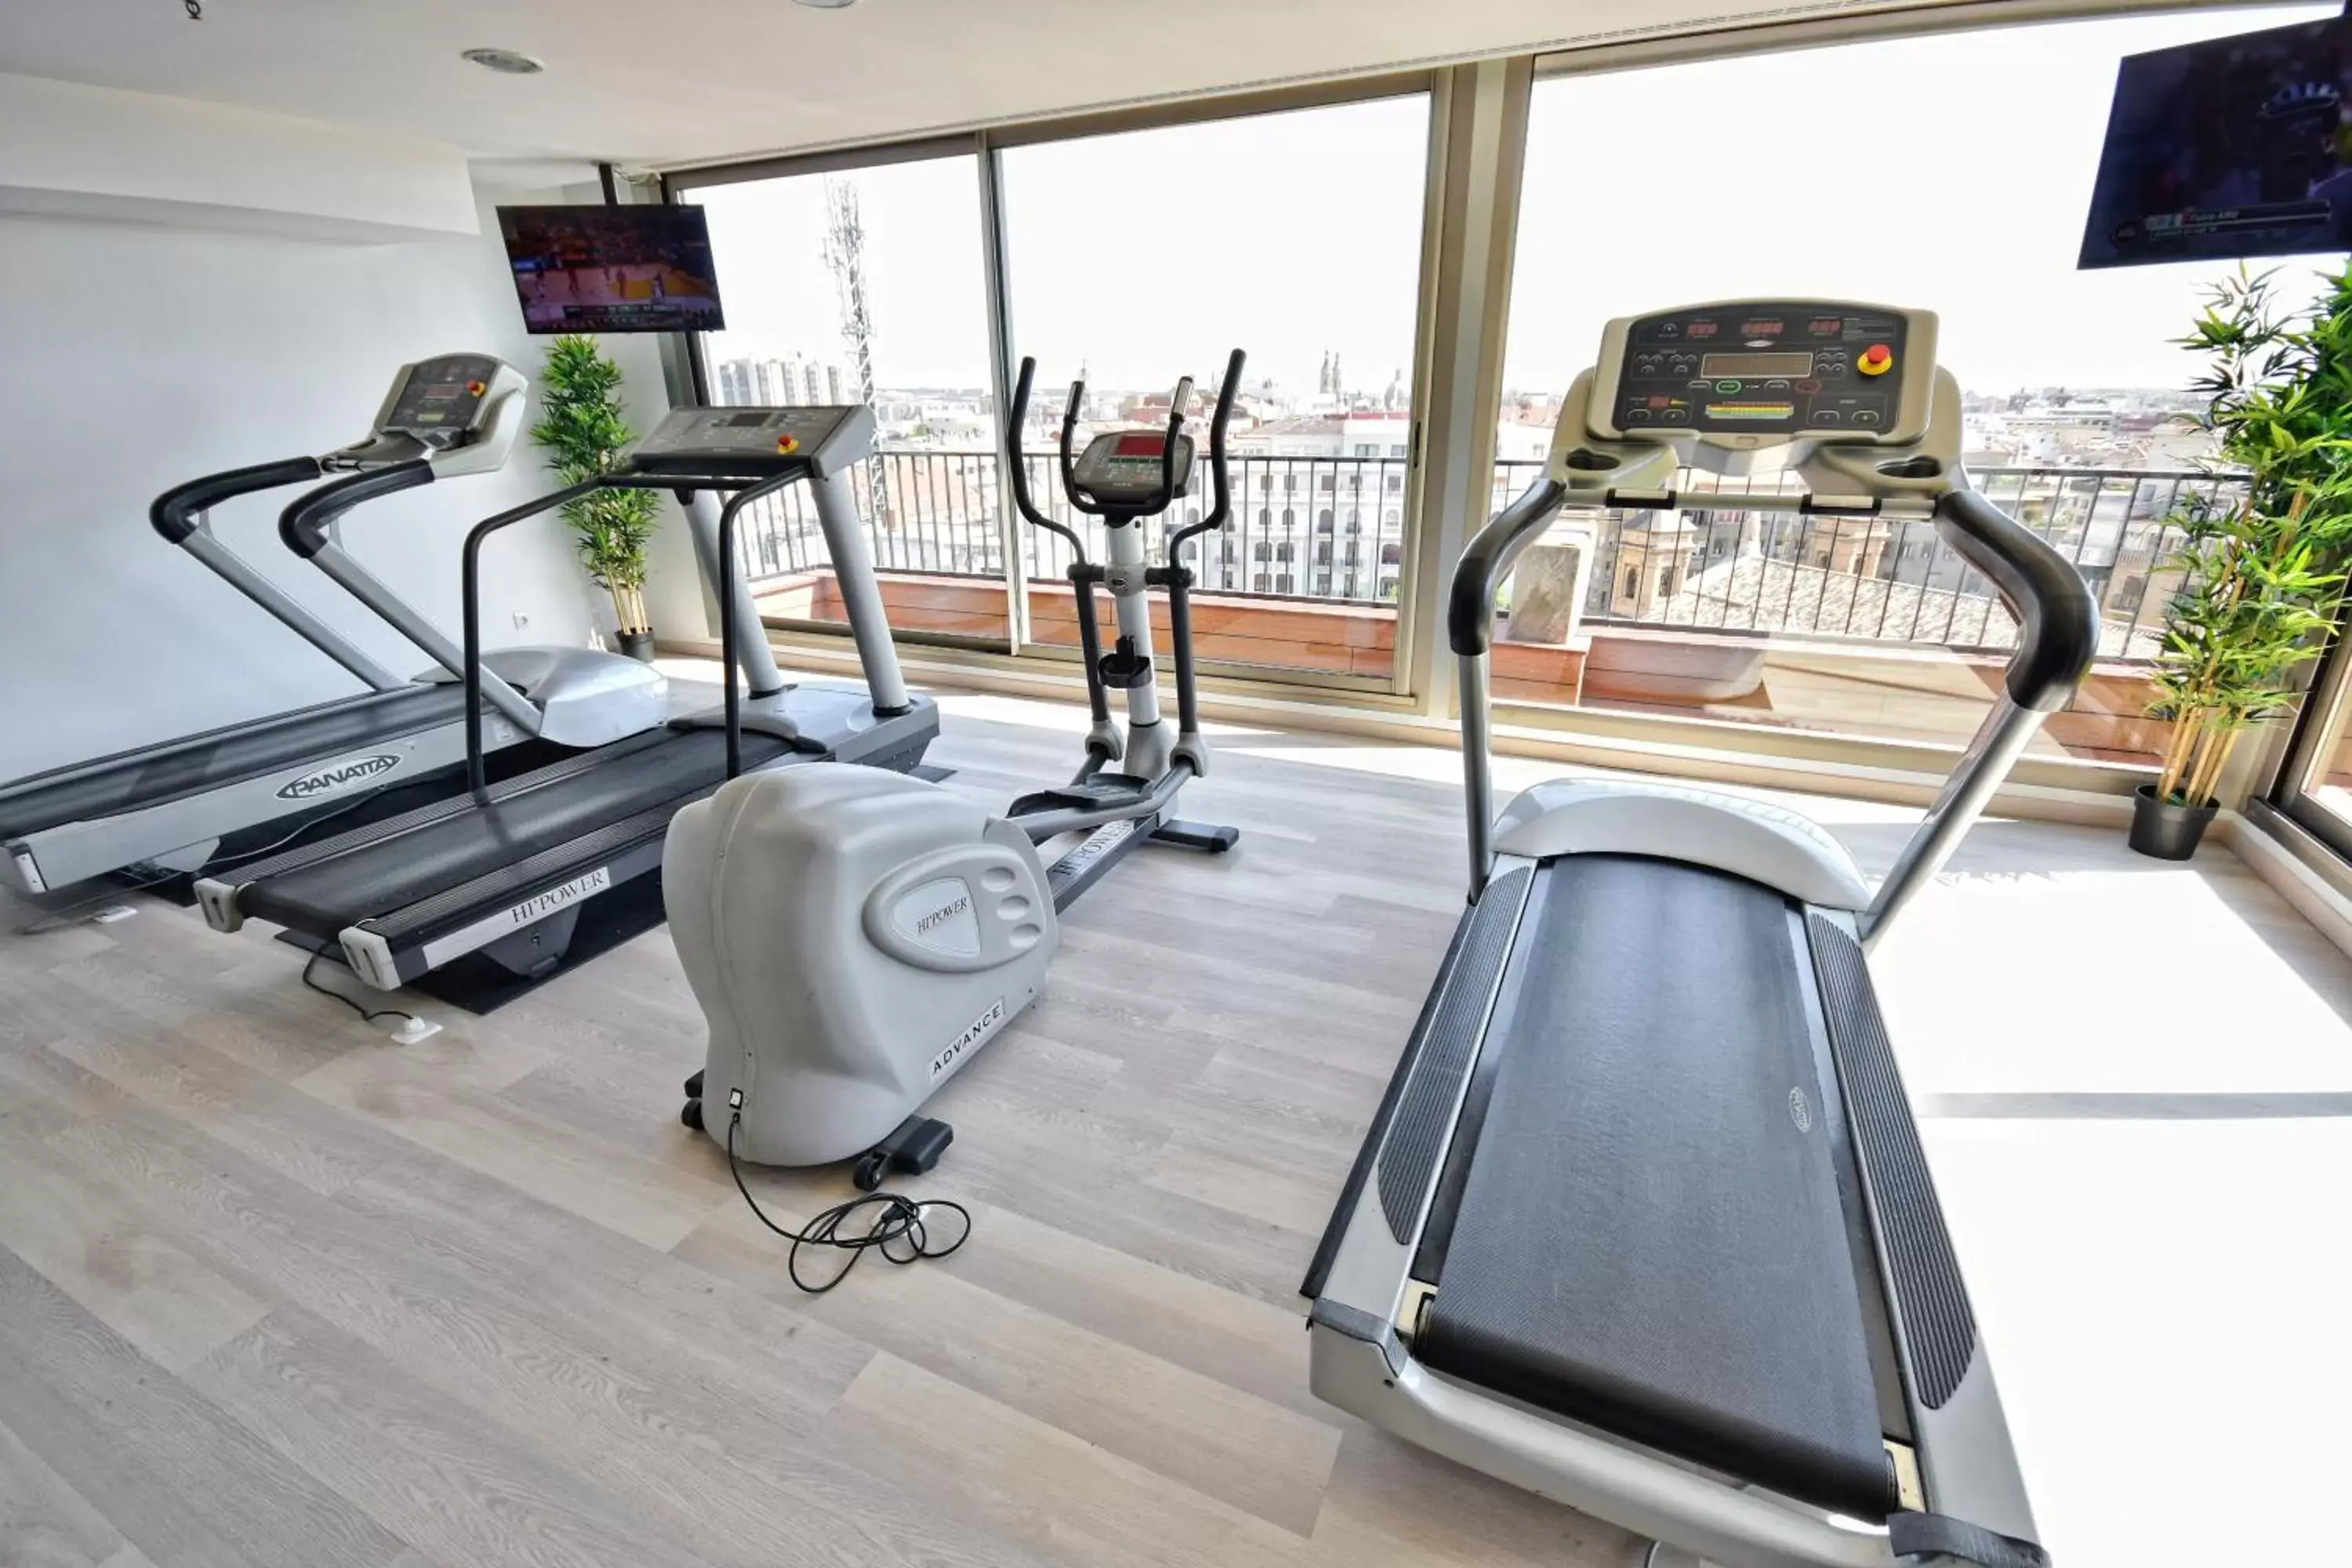 Fitness centre/facilities, Fitness Center/Facilities in Zenit Don Yo